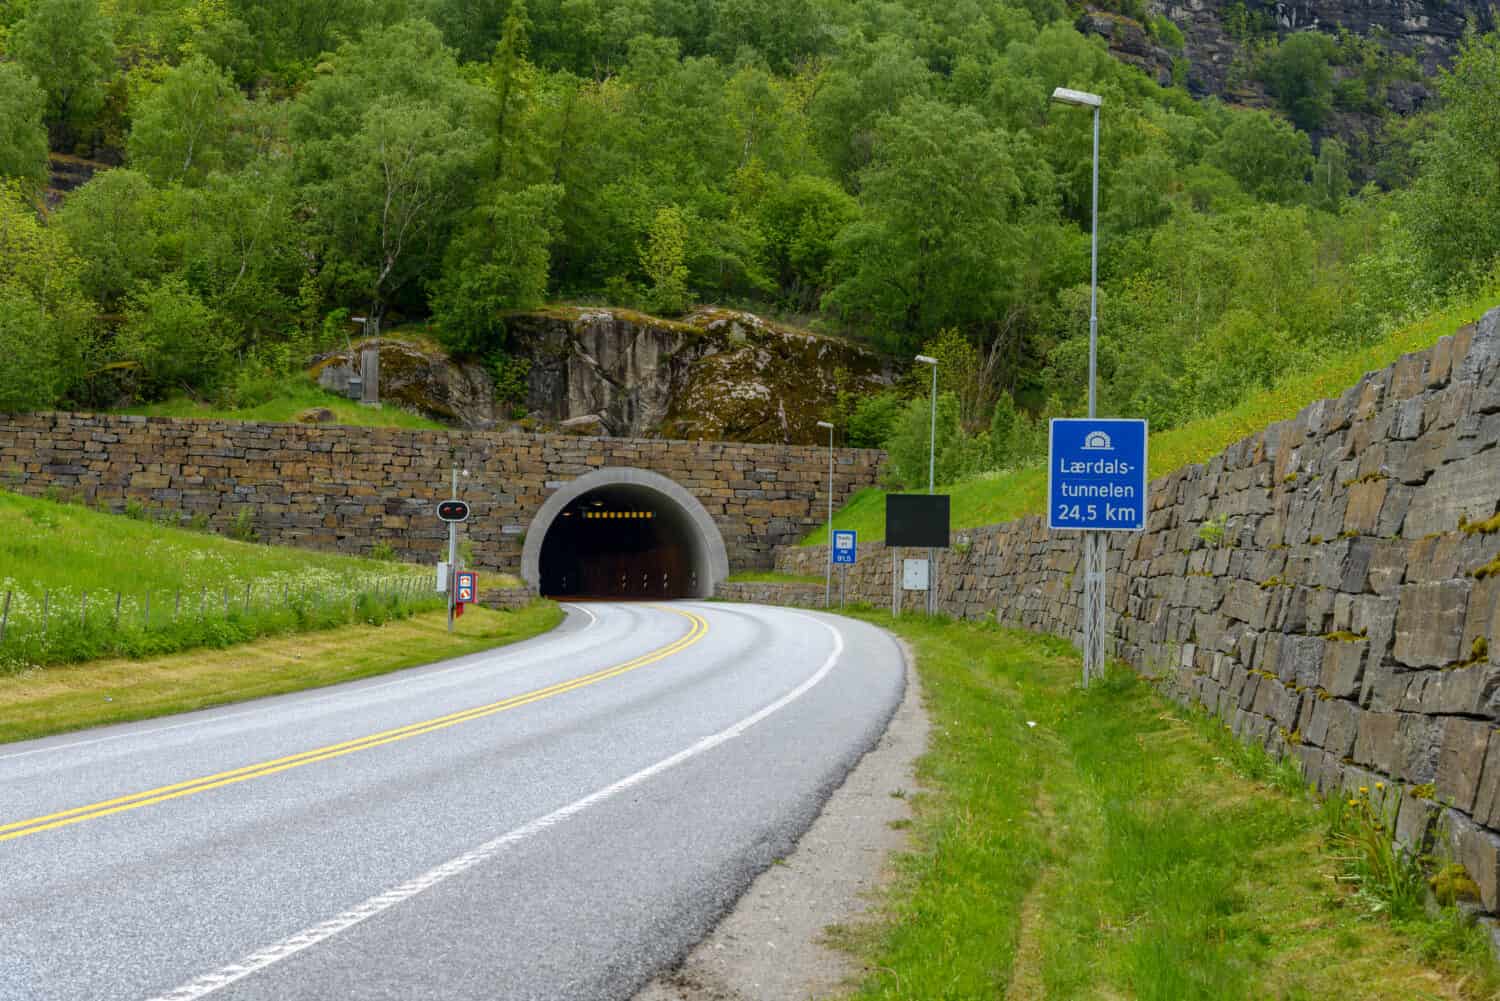 Laerdal Tunnel in Norway - the longest road tunnel in the world, it's 24.5 KM long.